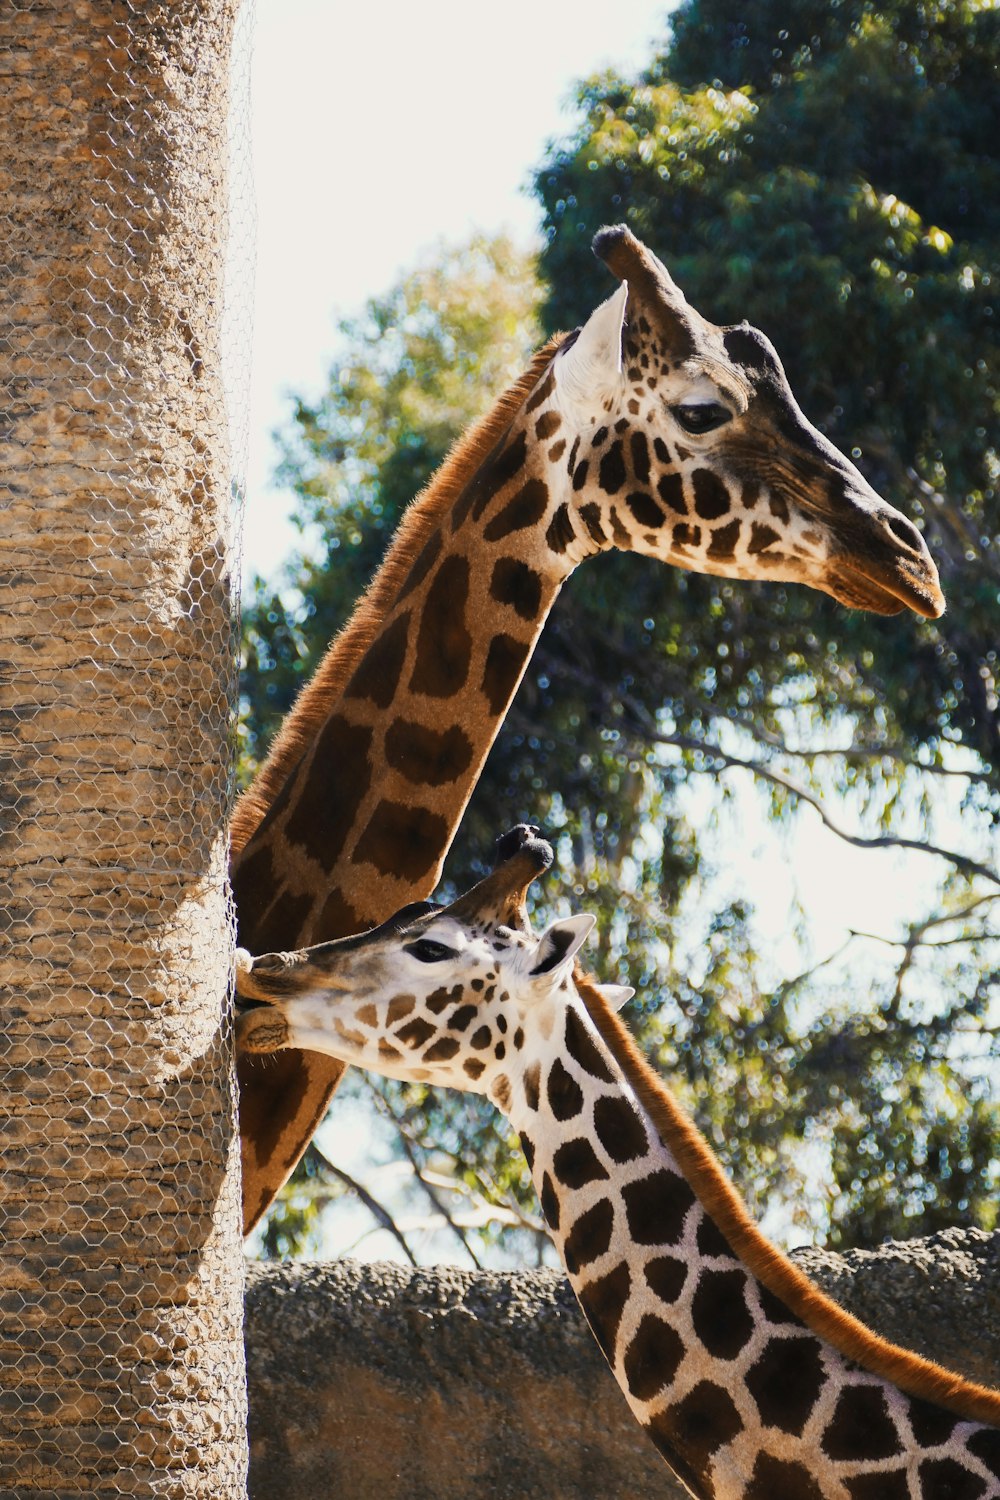 giraffes standing around in a zoo exhibit